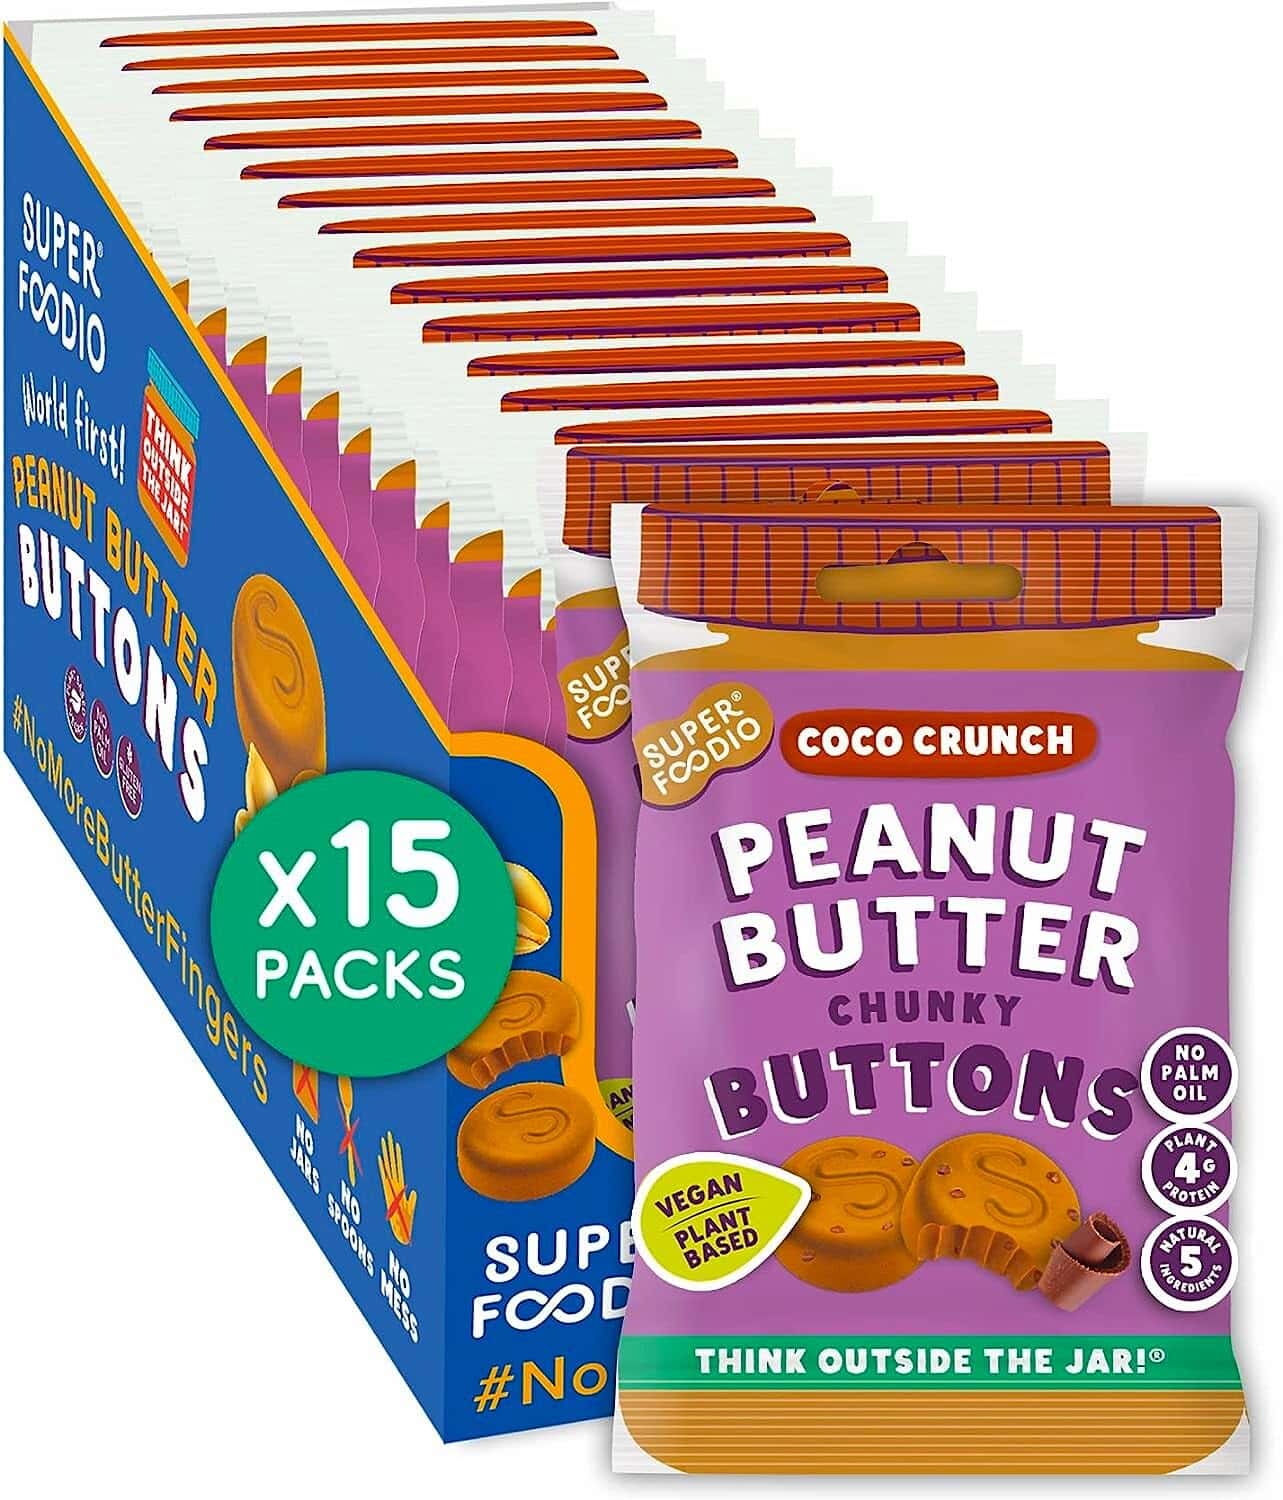 Peanut Butter Buttons - Coco Crunch (20g X 15 Packs)